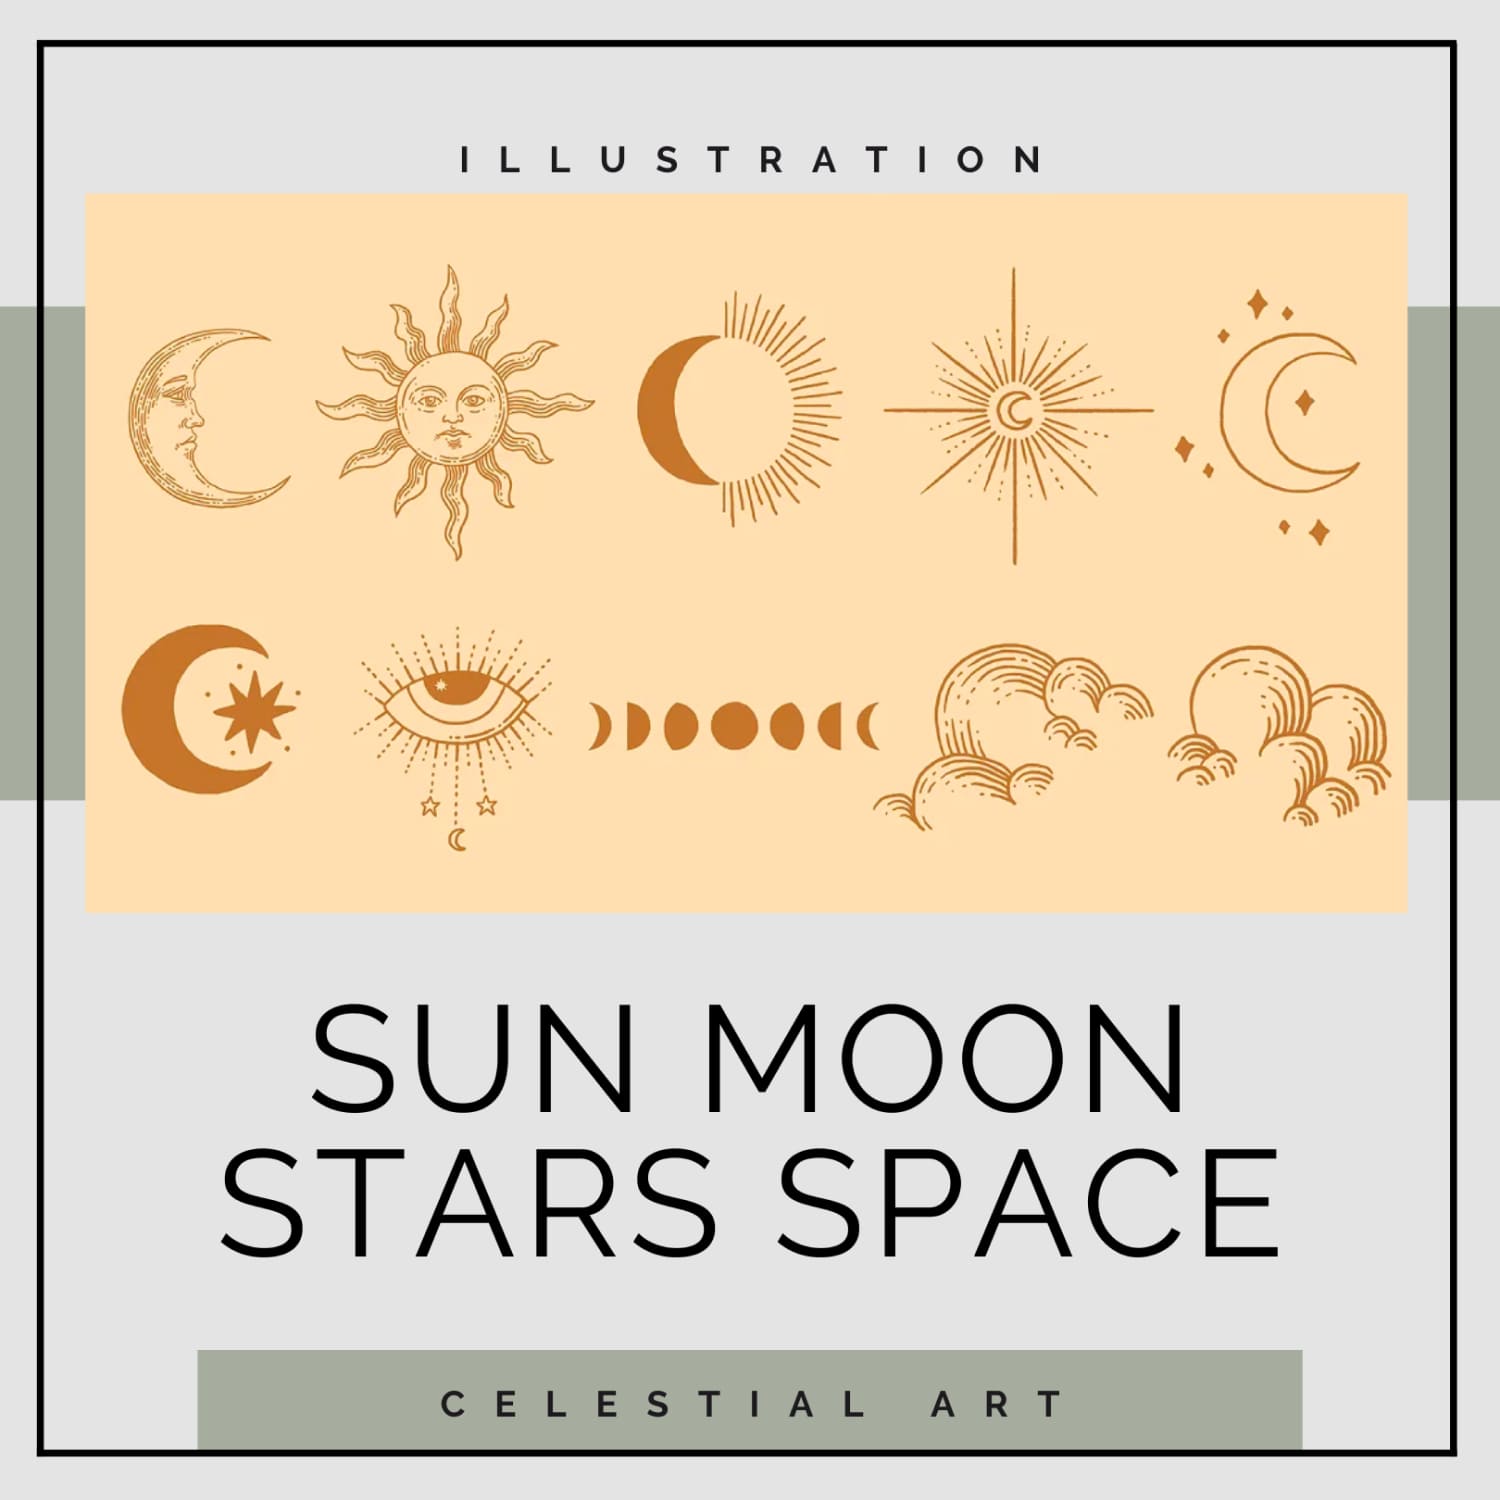 Celestial Art Sun Moon Stars Space - main image preview.